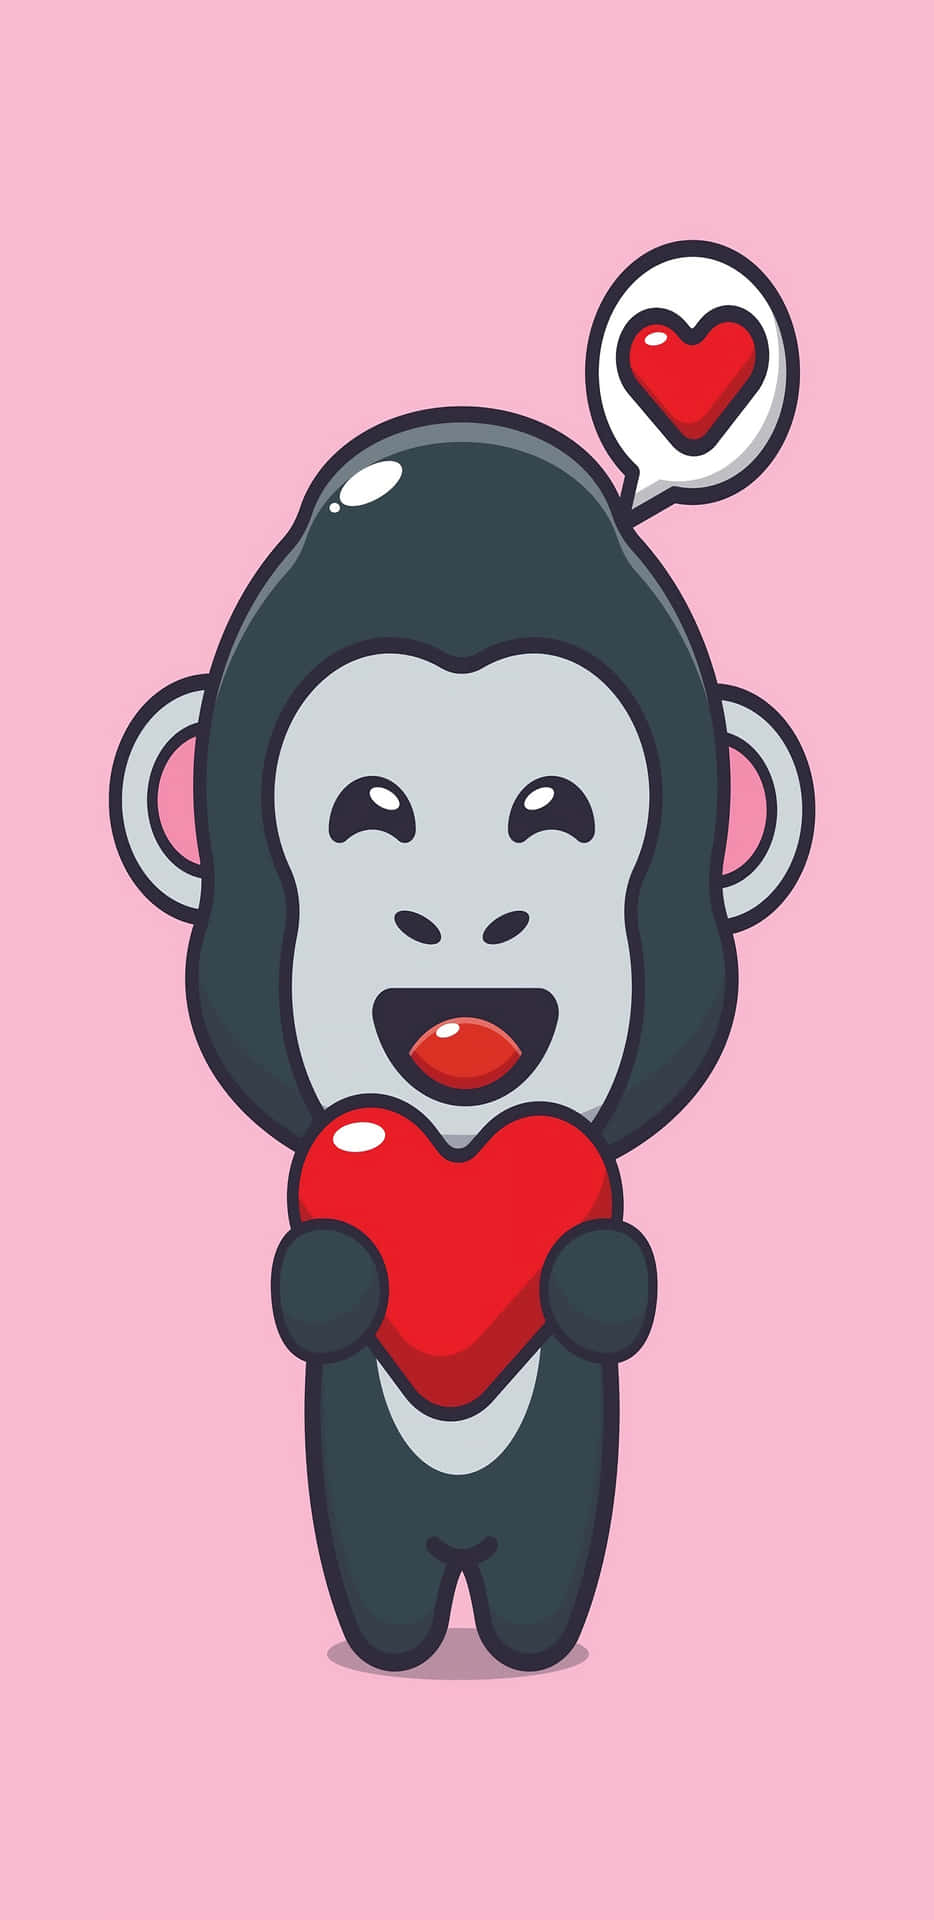 Pixel 3xl Gorilla Background With Heart